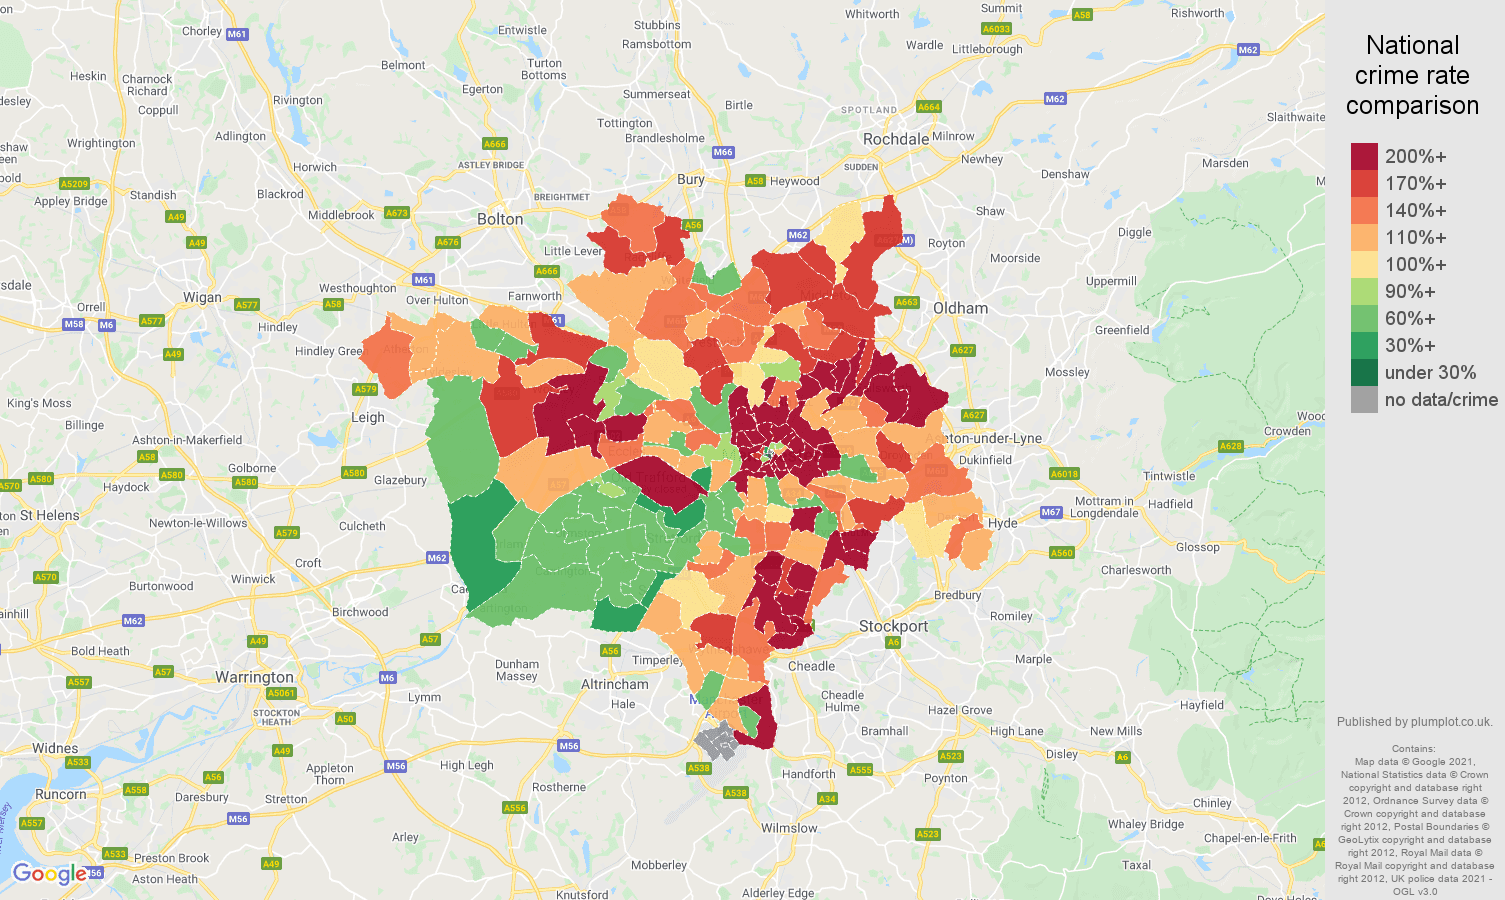 Manchester vehicle crime rate comparison map